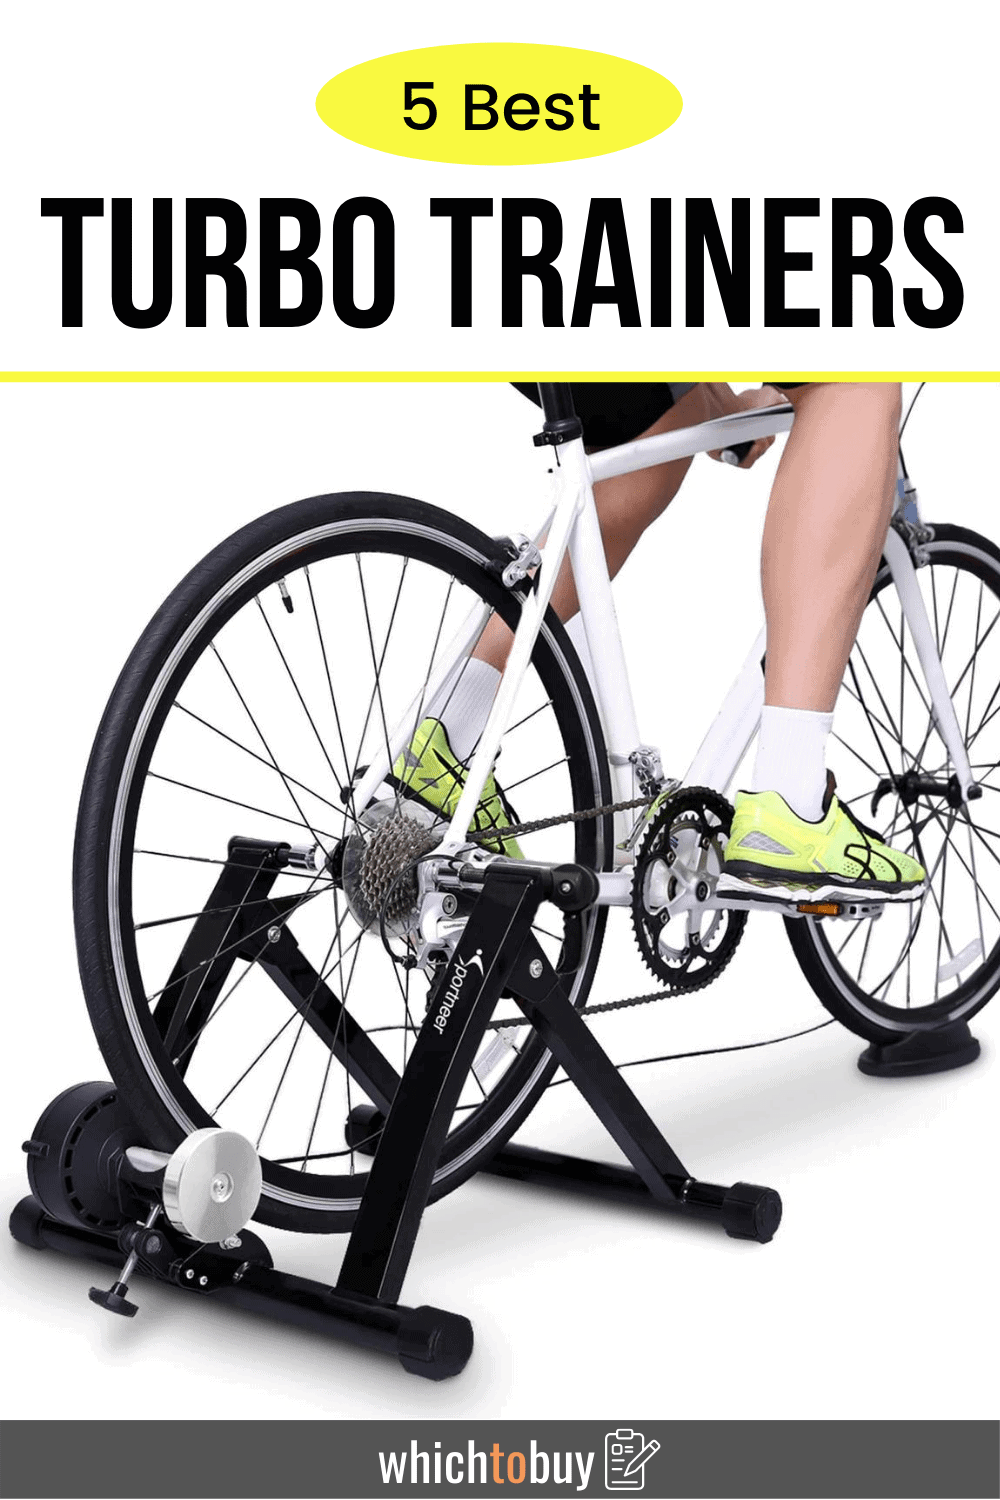 sportneer turbo trainer